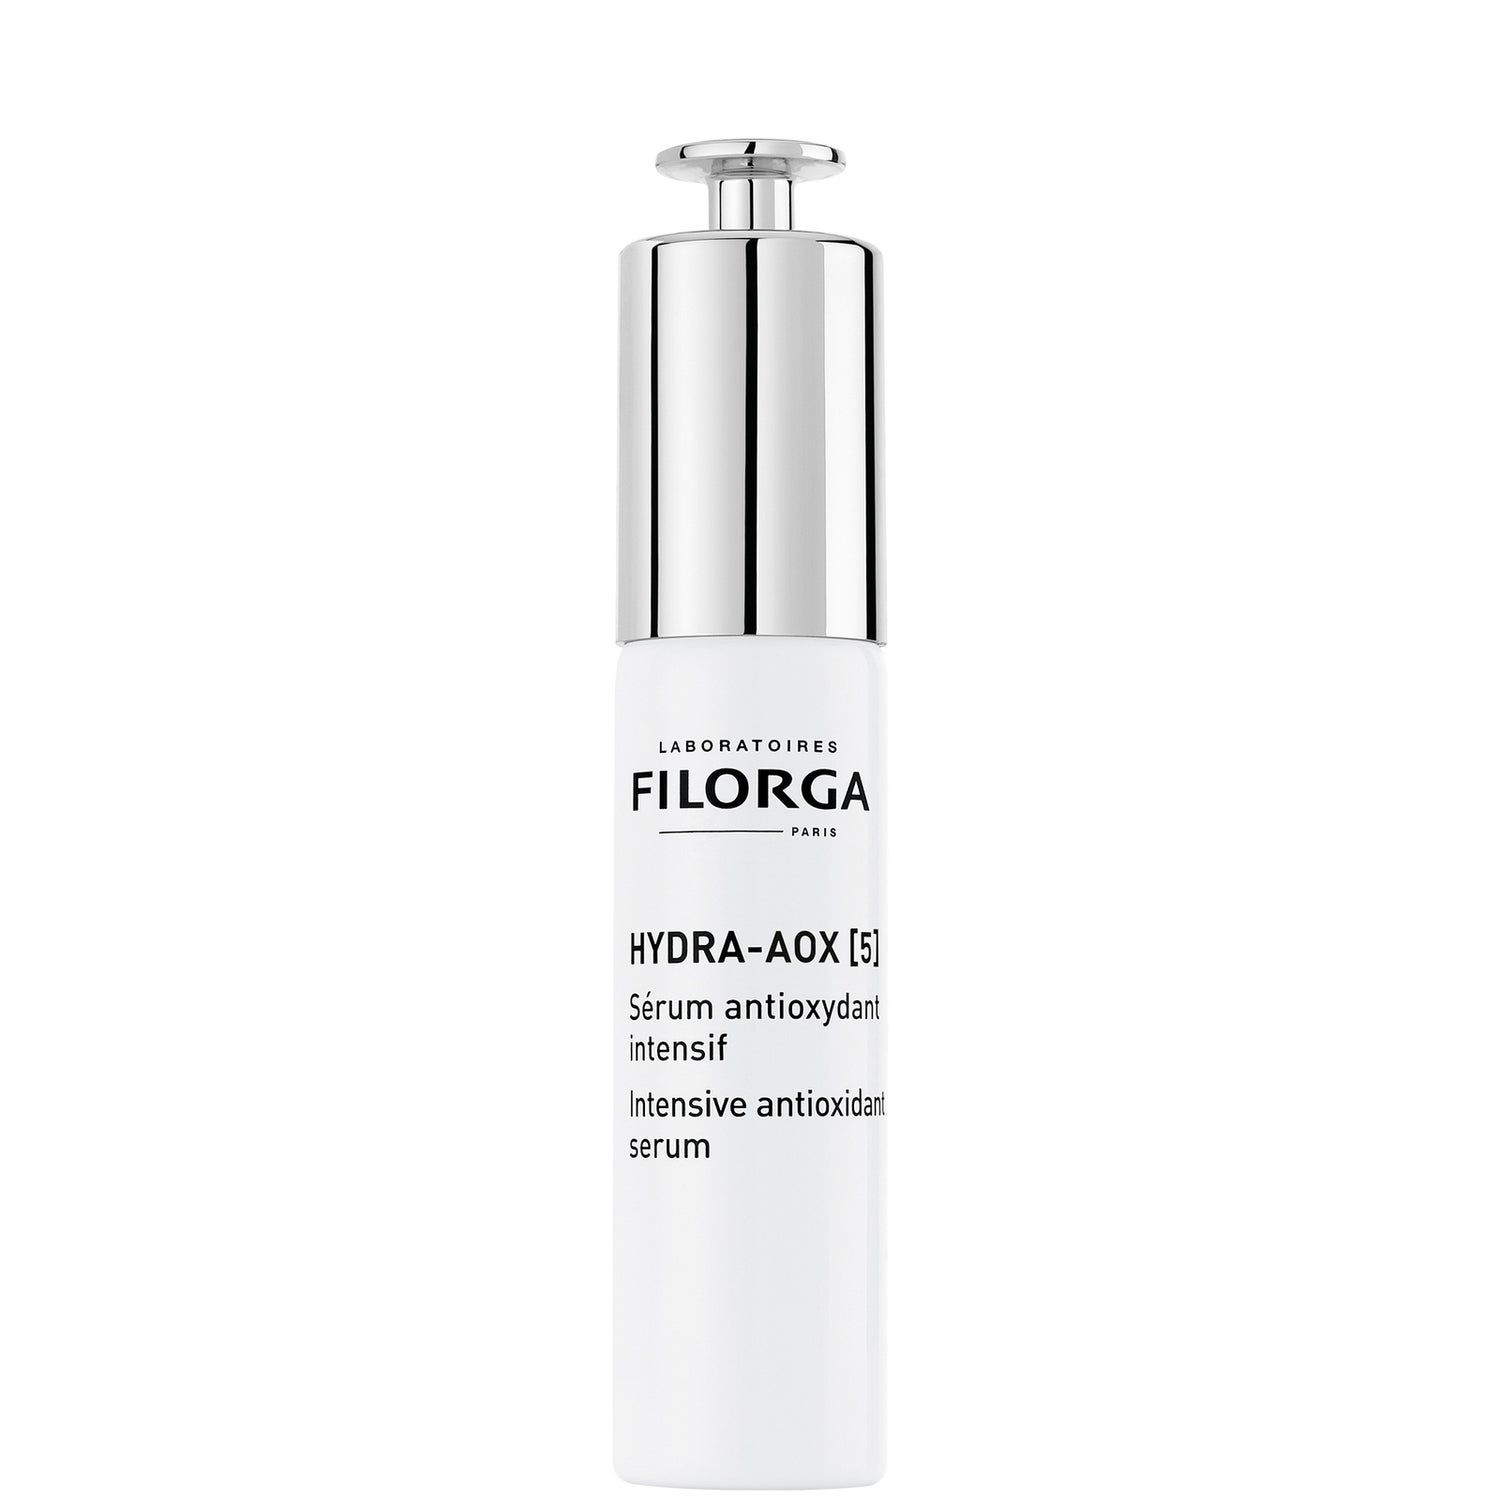 Filorga Hydra-AOX [5] Antioxidant Facial Serum (1 oz.)